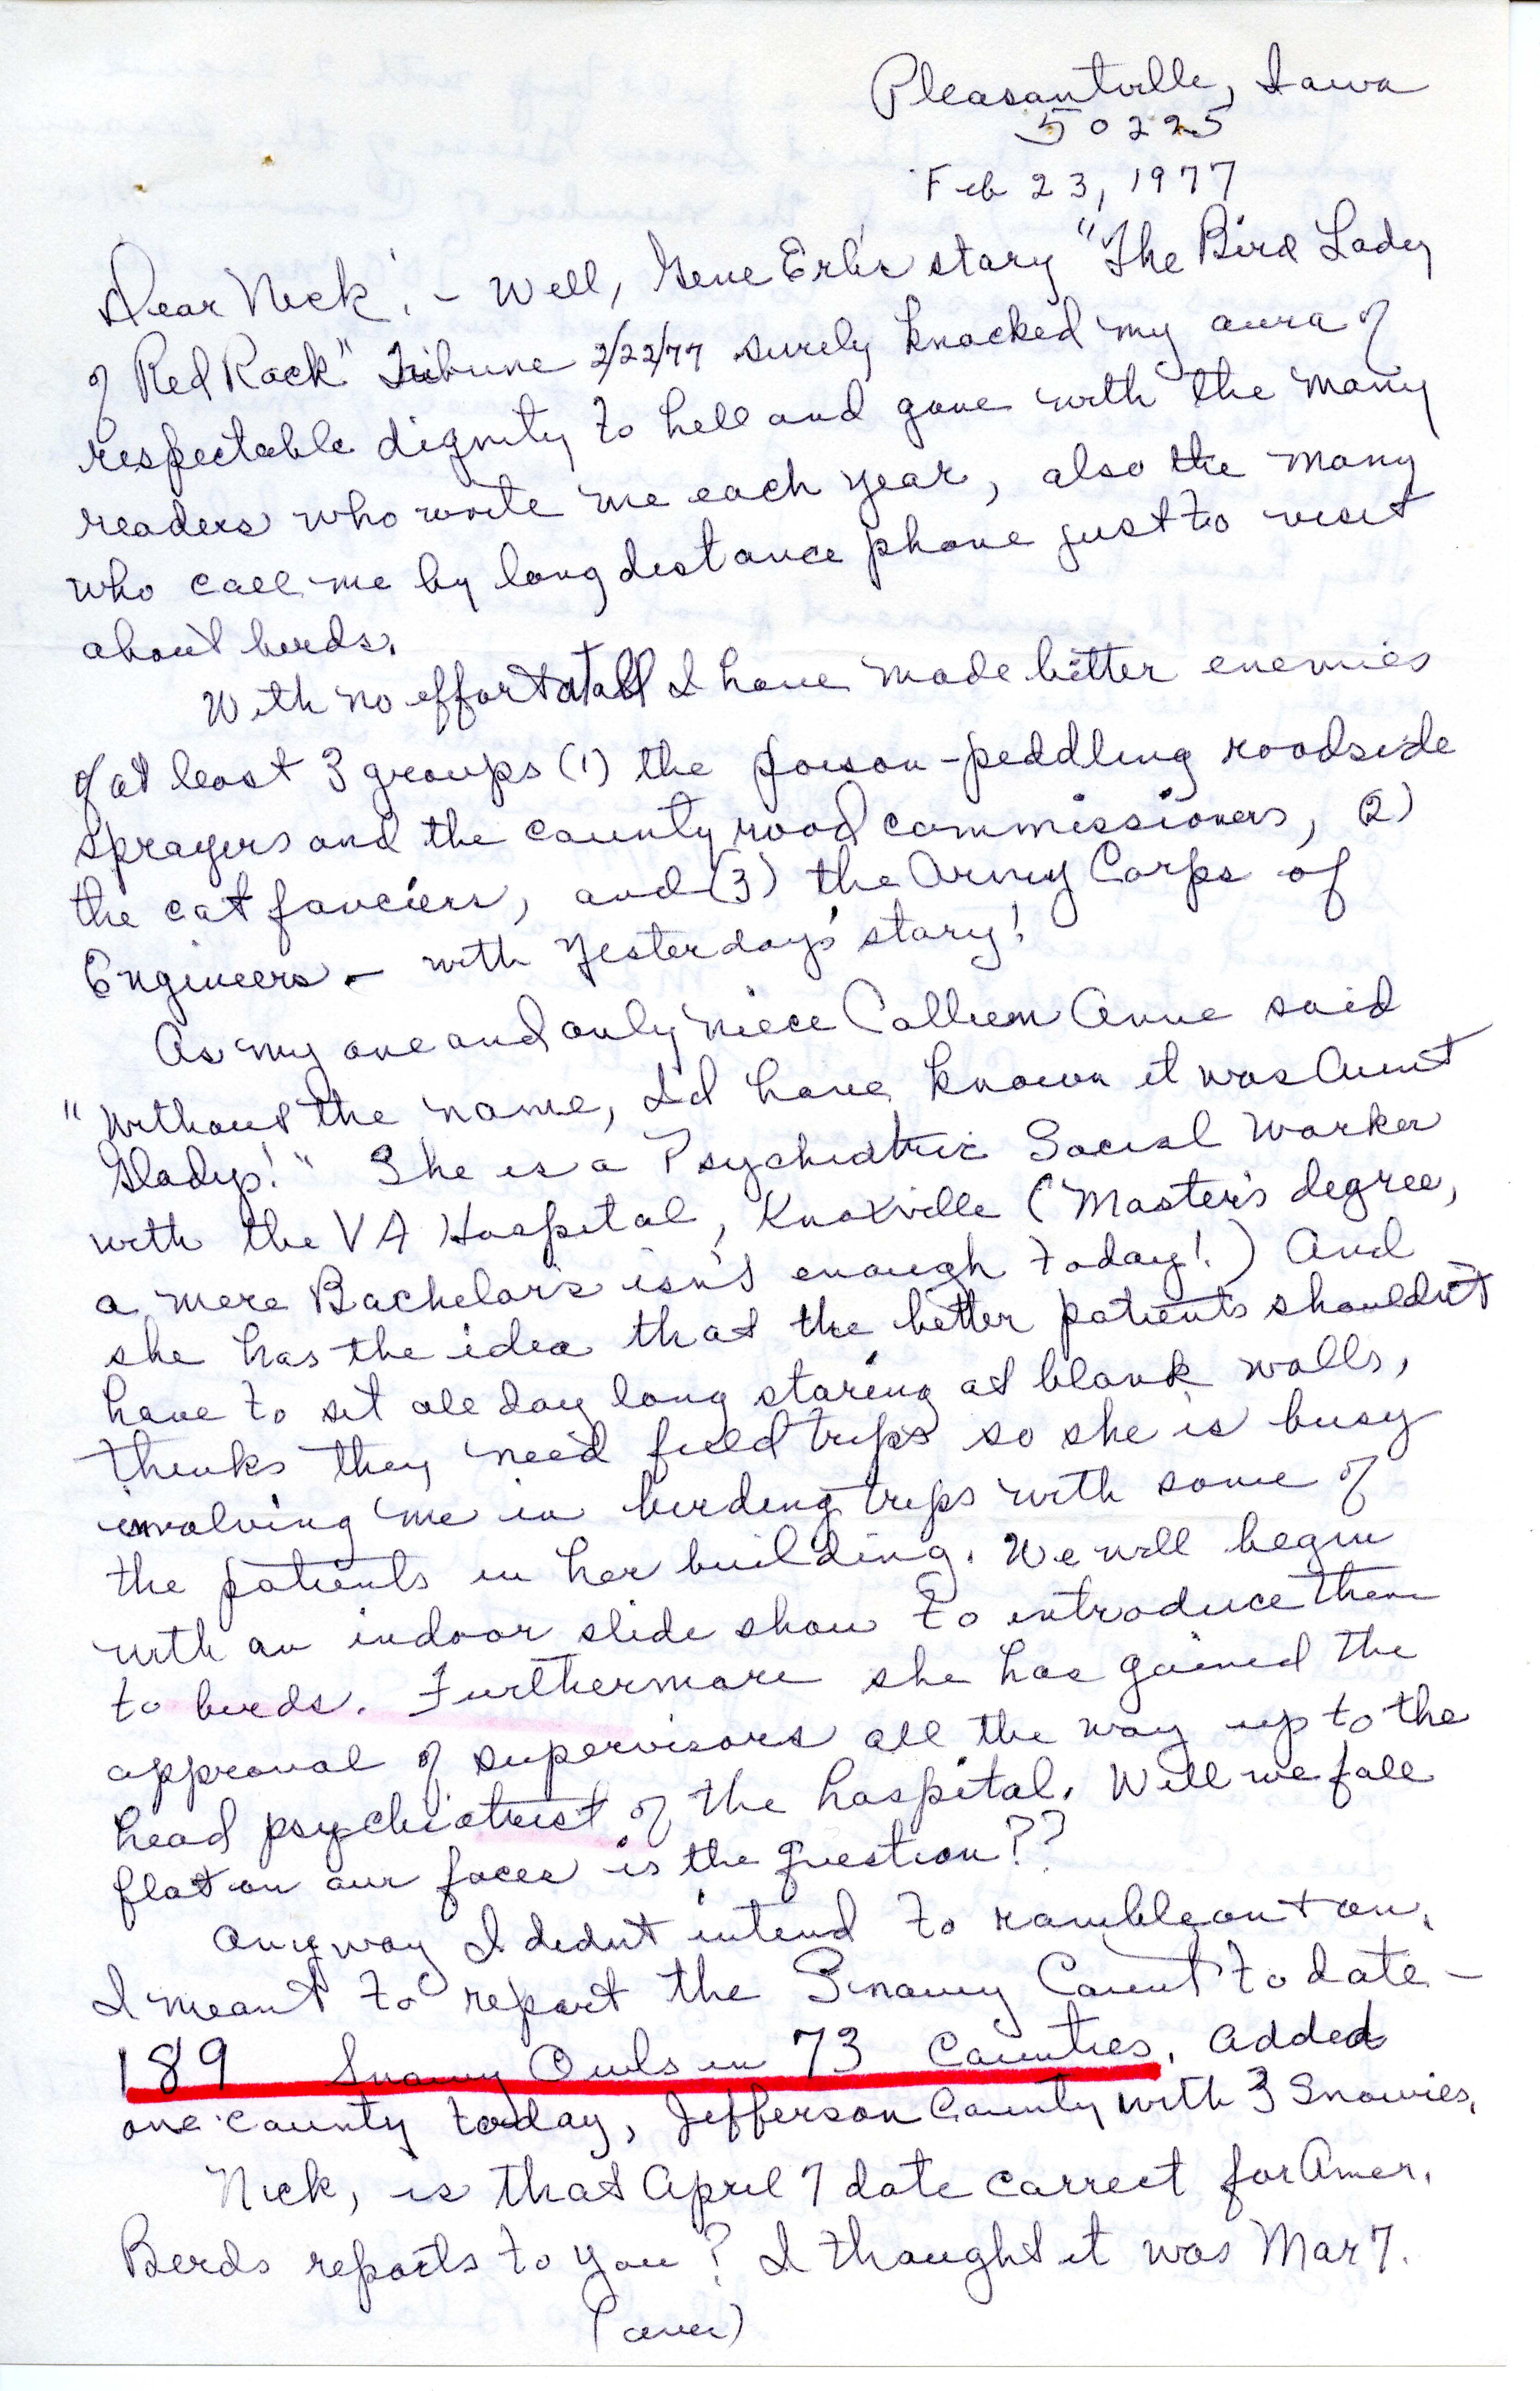 Gladys Black letter to Nicholas S. Halmi regarding bird counts, February 23, 1977